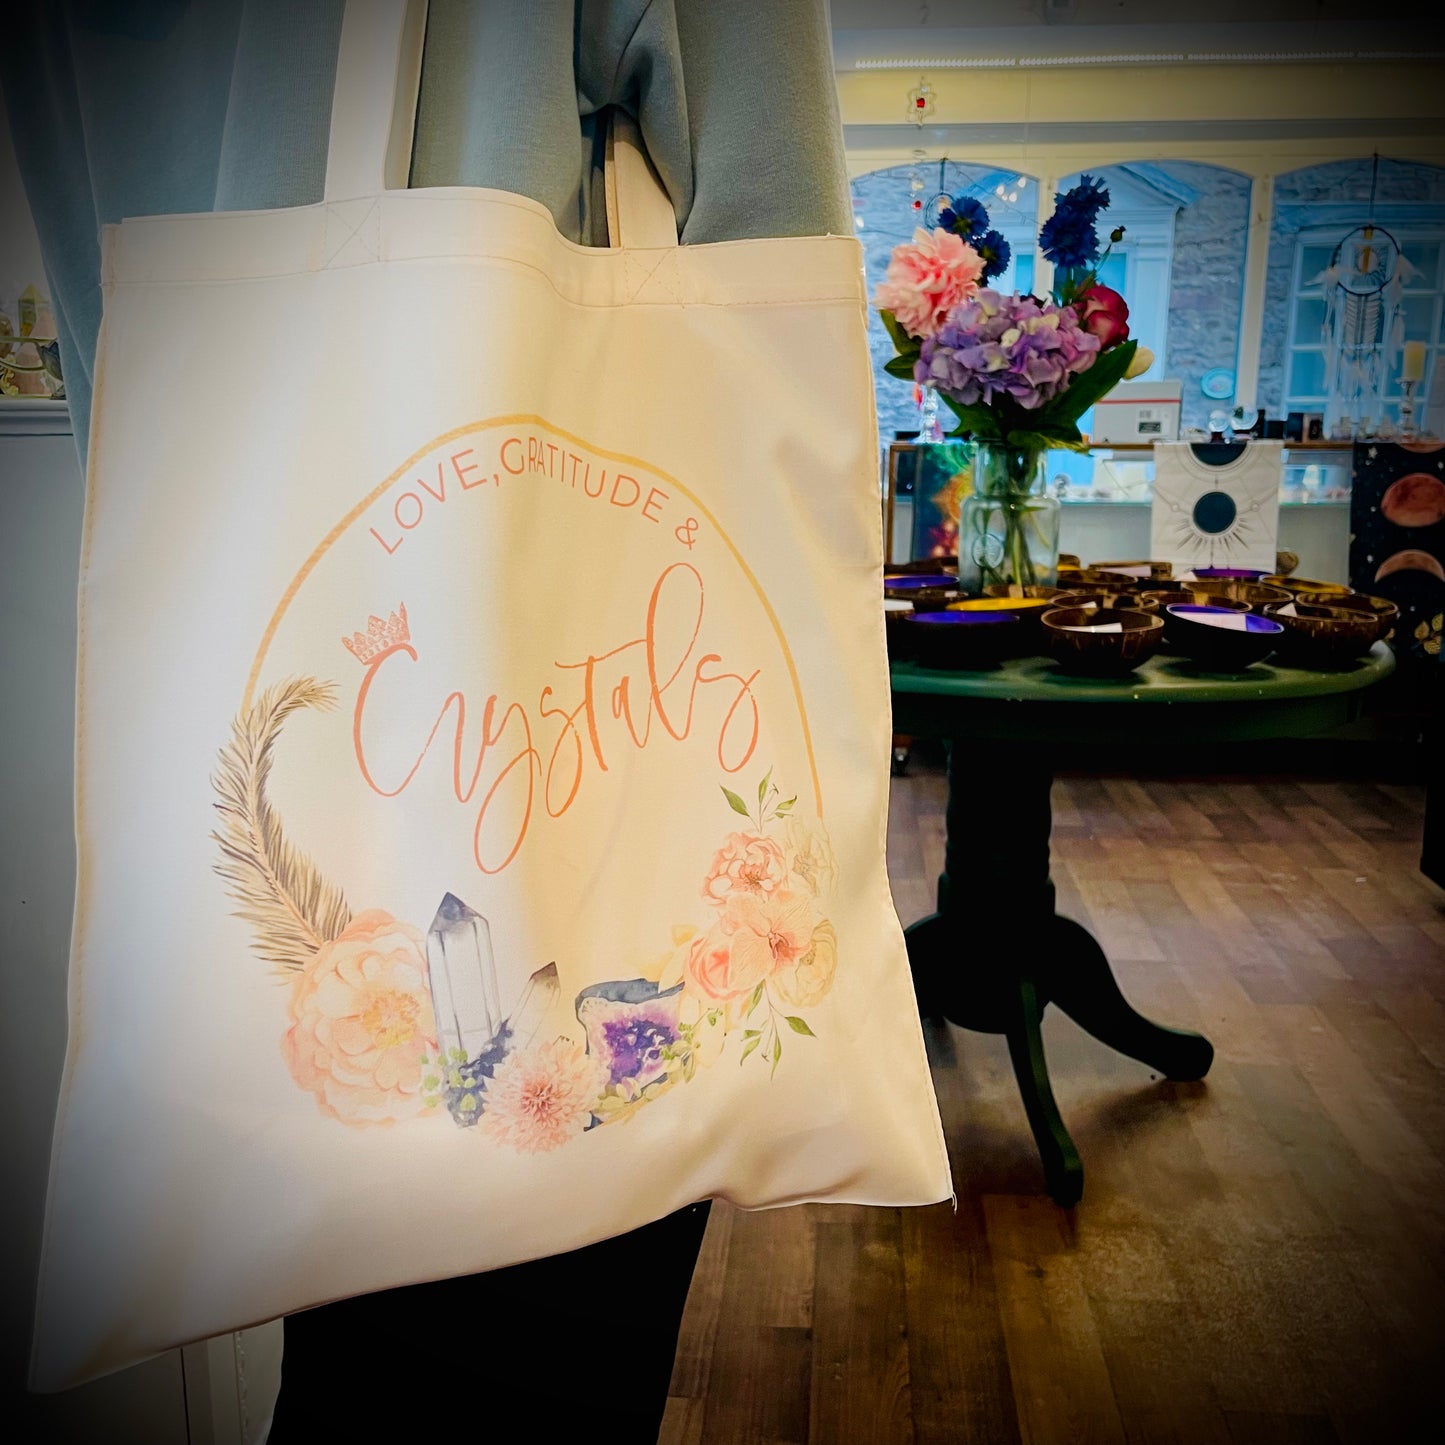 Official Love, Gratitude & Crystals Tote Bag